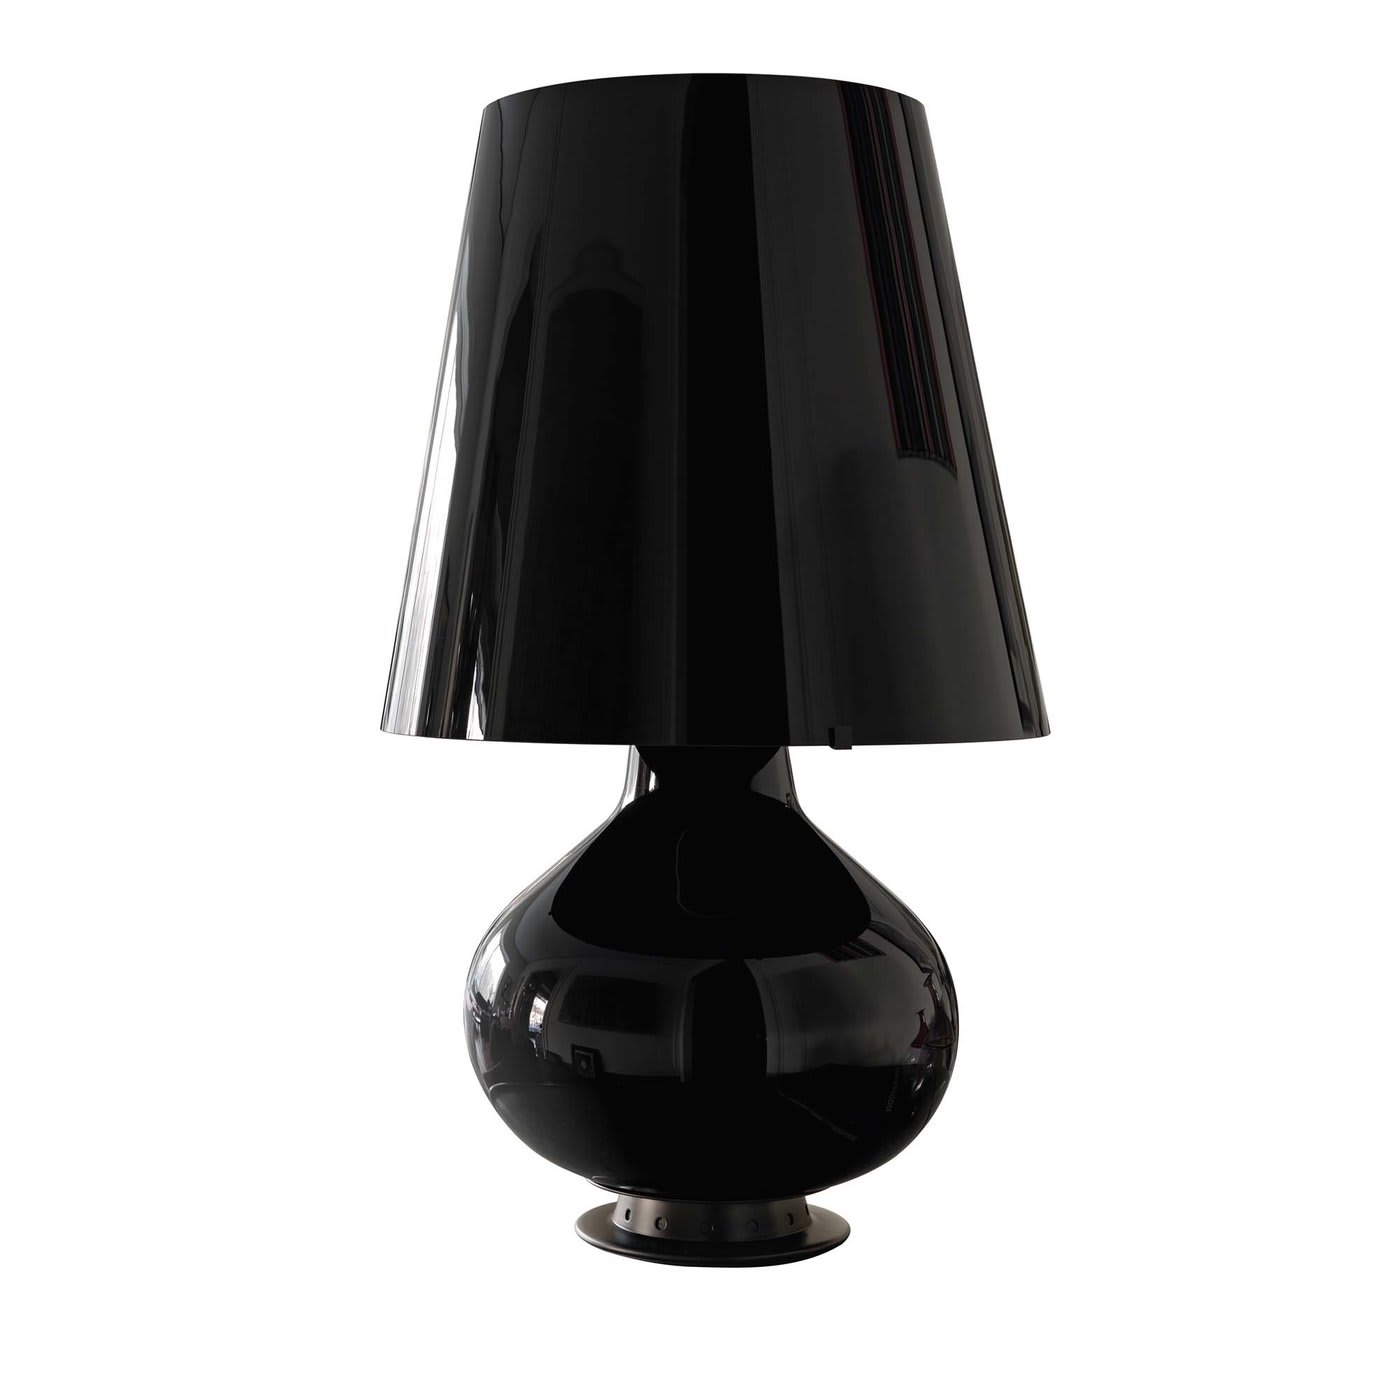 Fontana Total Black Table Lamp by Max Ingrand - FontanaArte